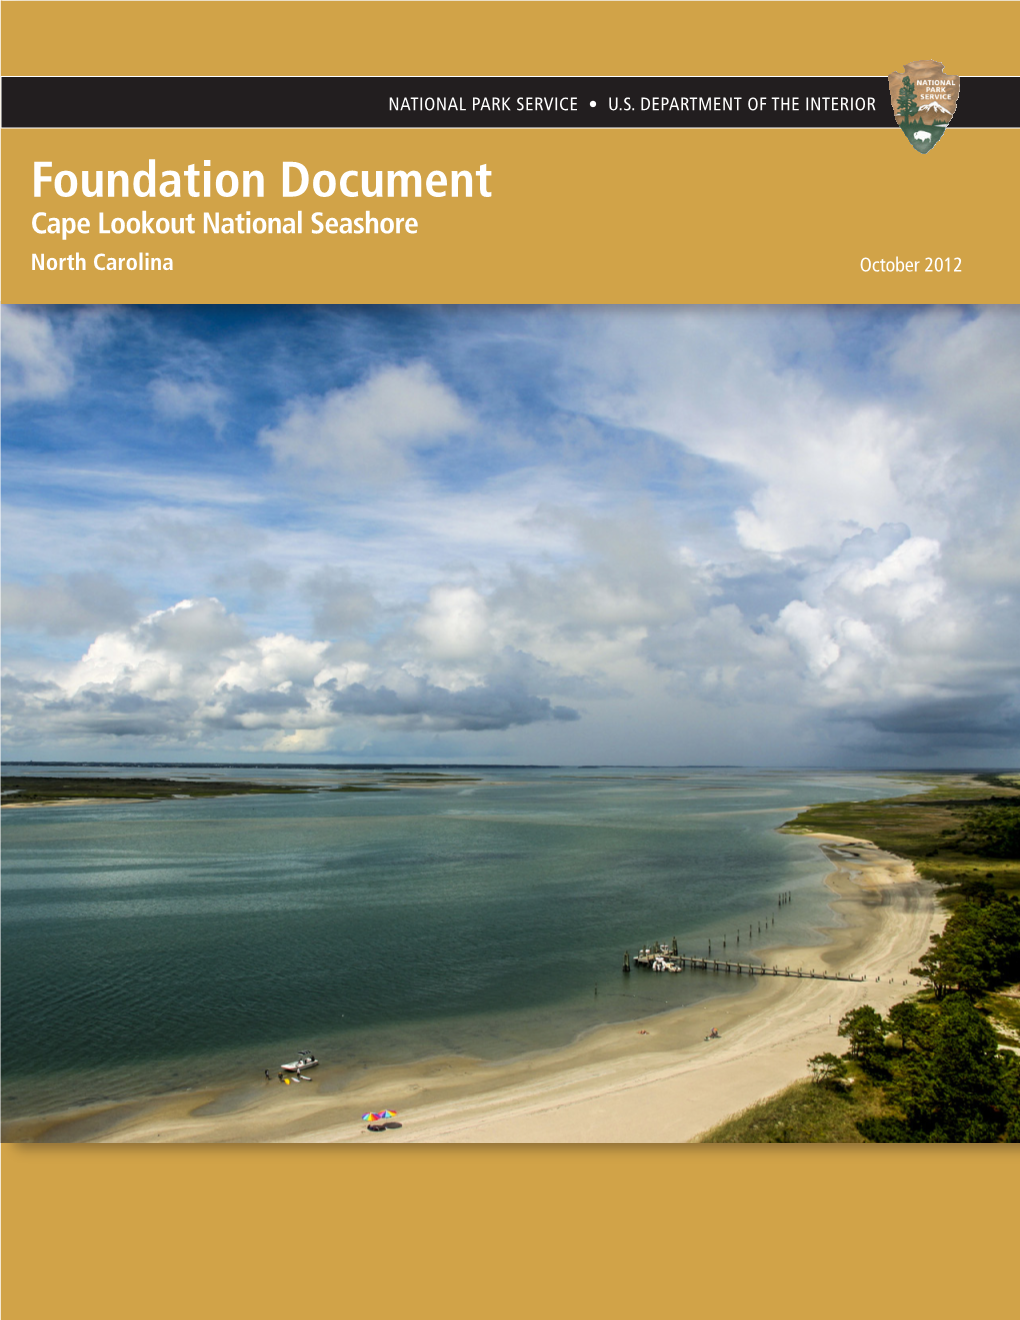 Foundation Document, Cape Lookout National Seashore, North Carolina